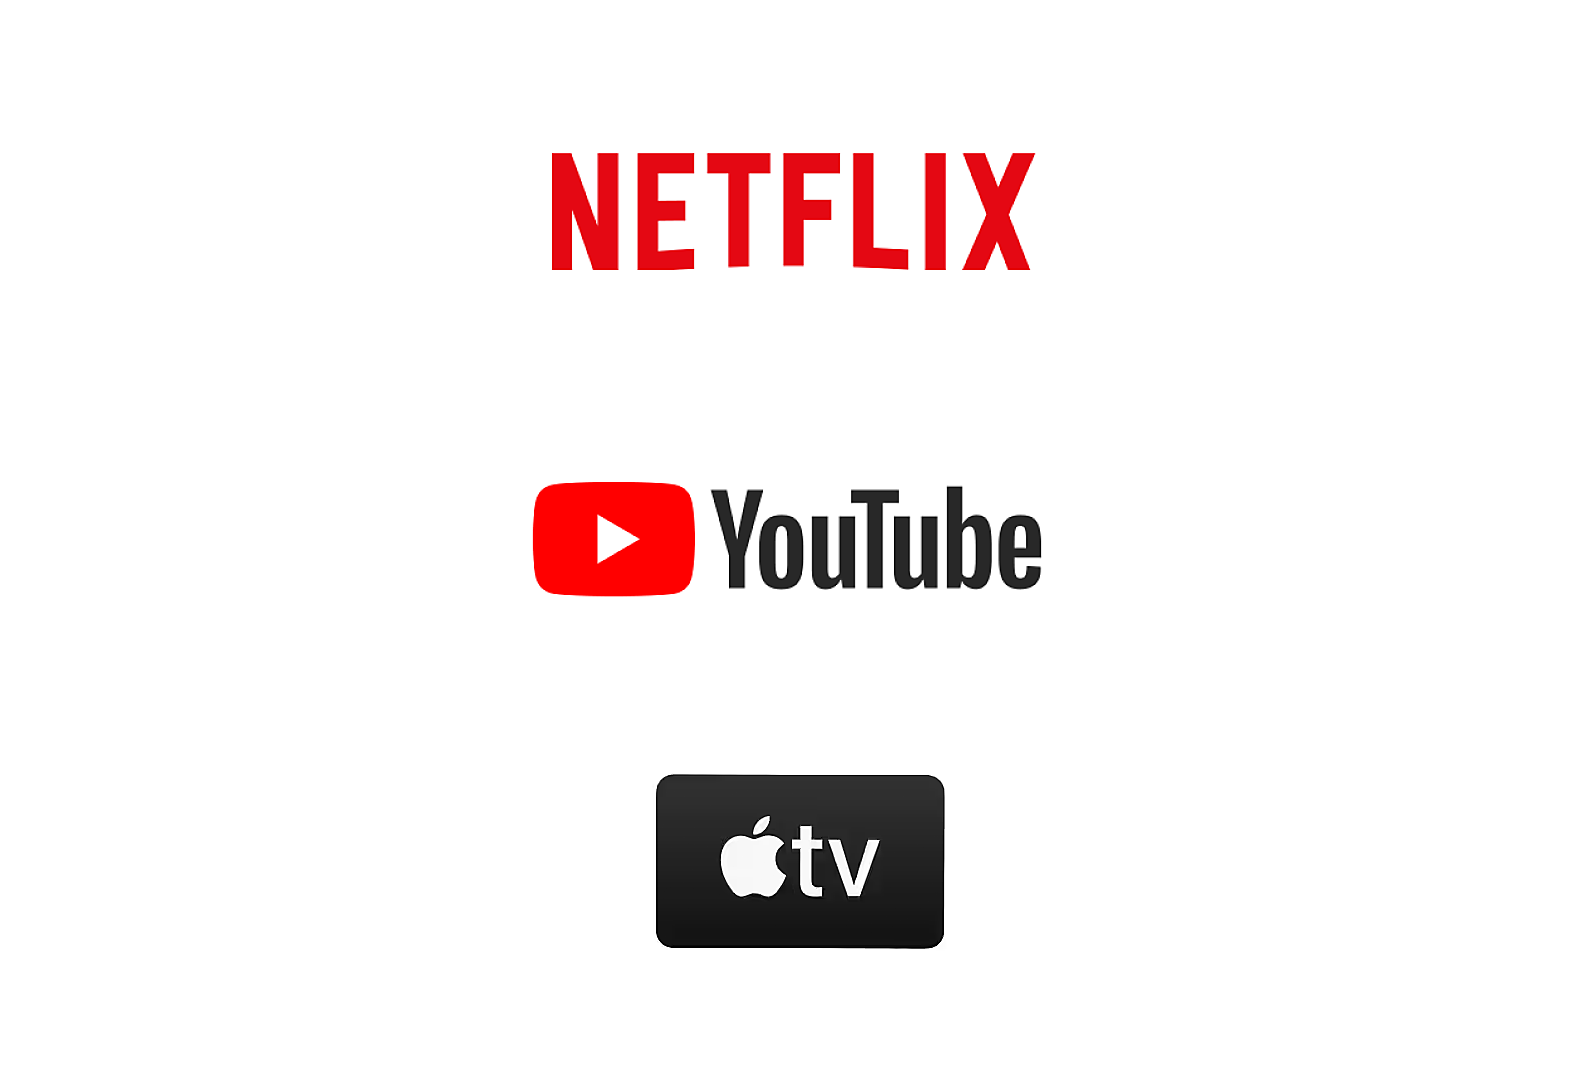 Logo Netflix, YouTube, Amazon prime video và Apple TV